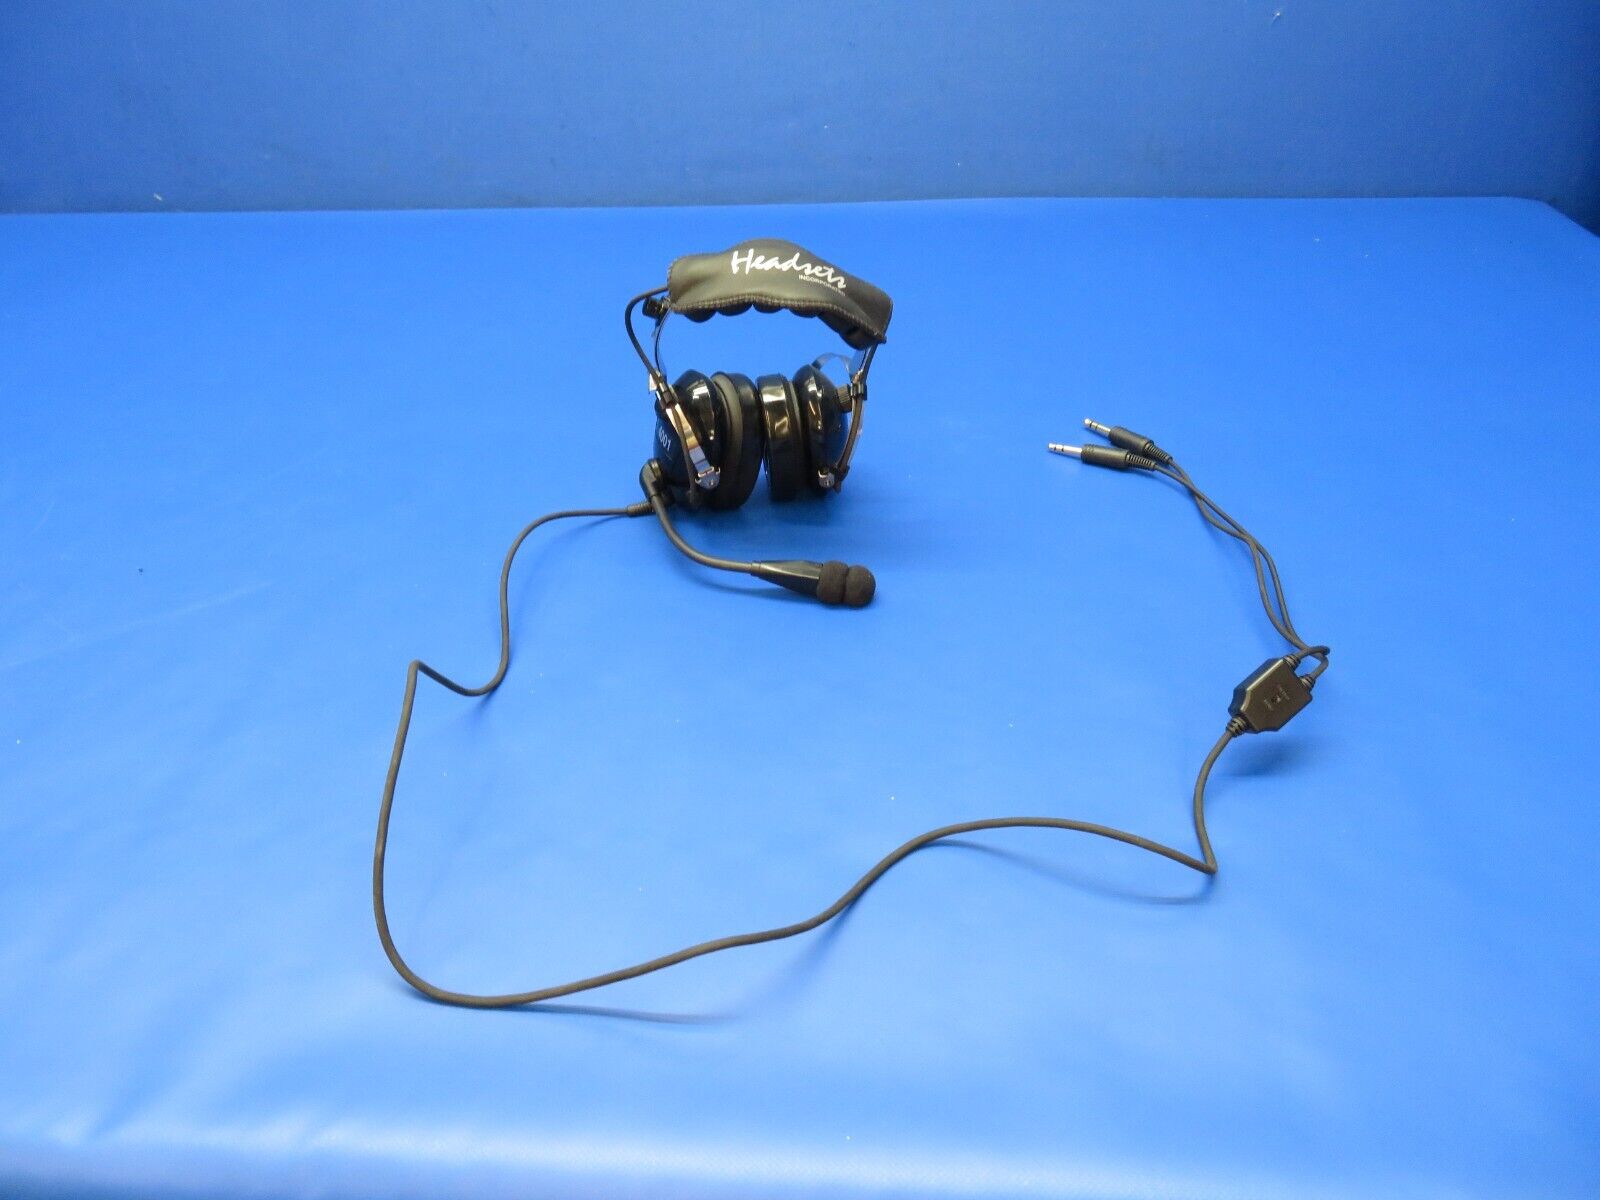 Aviation Headset DRE-4001 (0922-338)